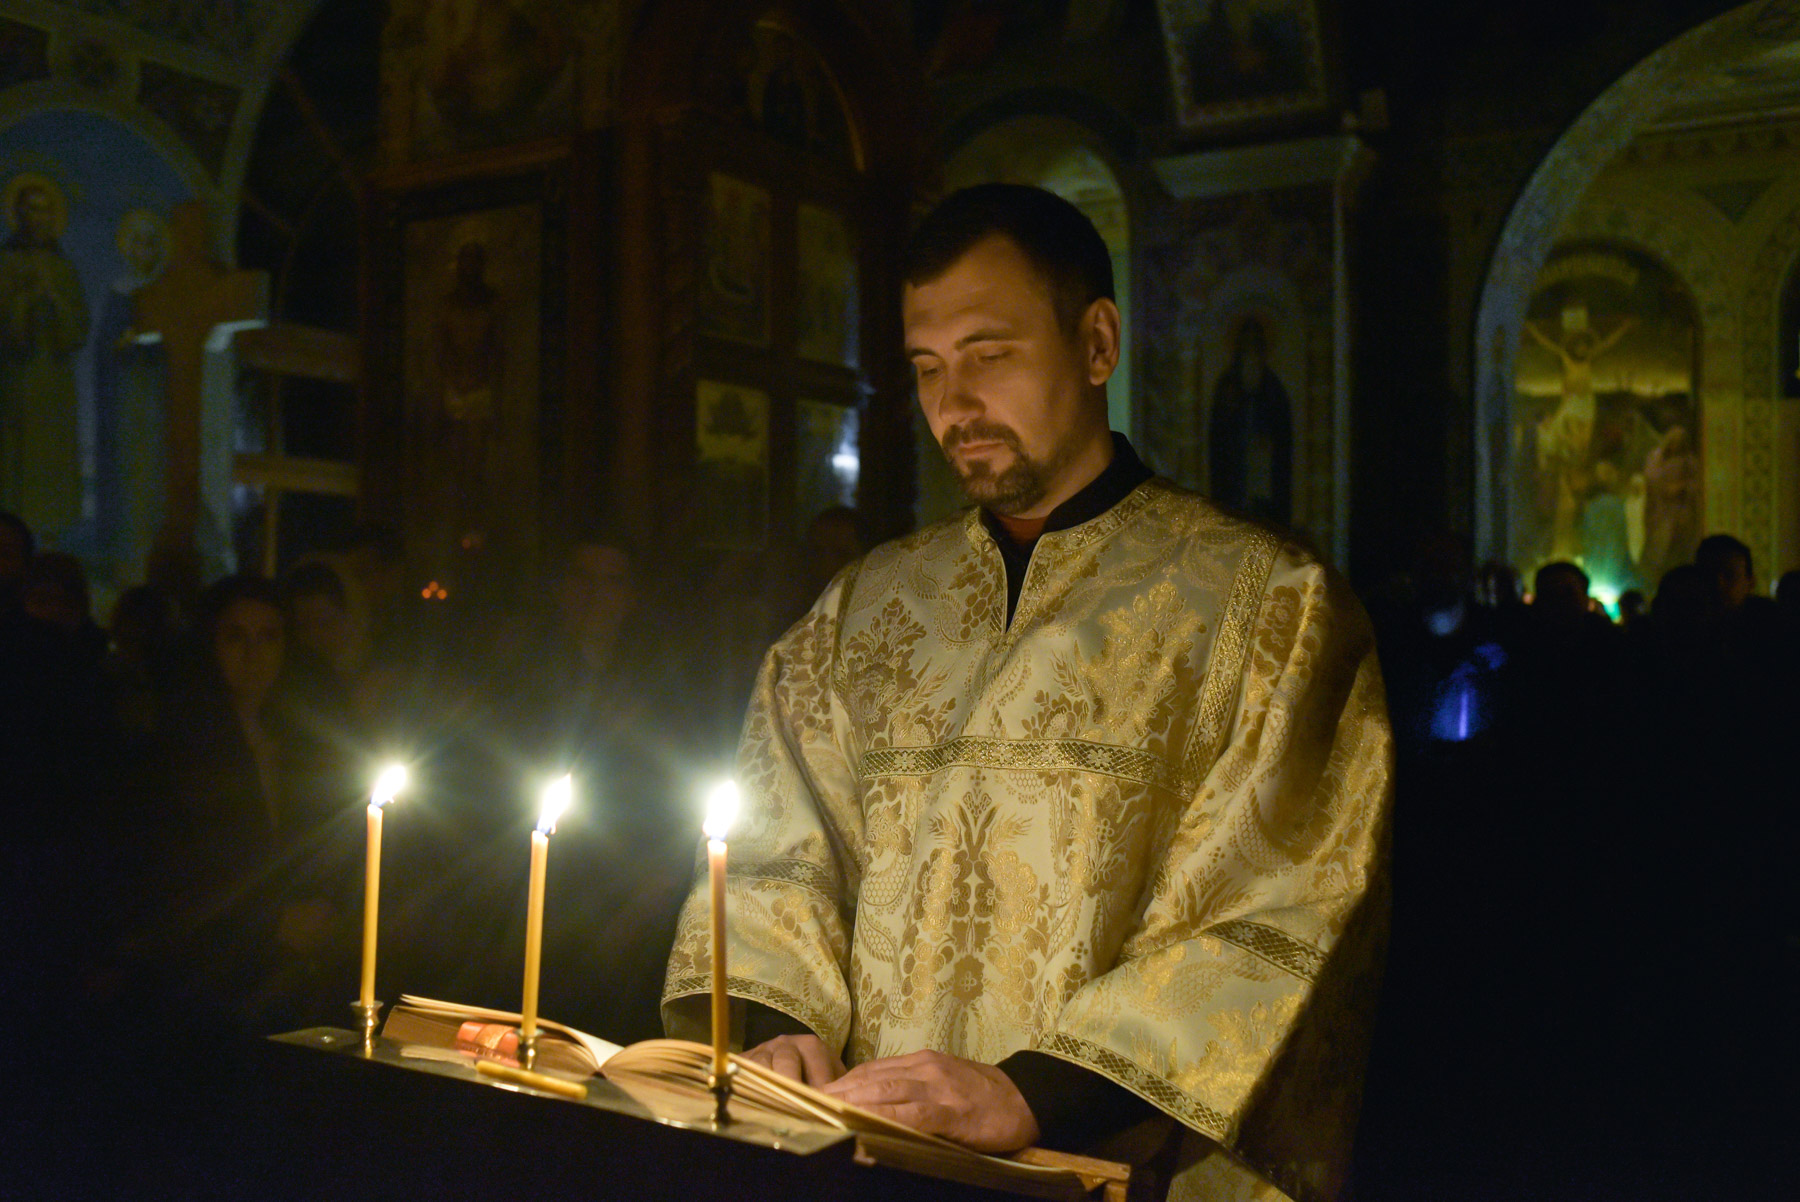 photos of orthodox christmas 0157